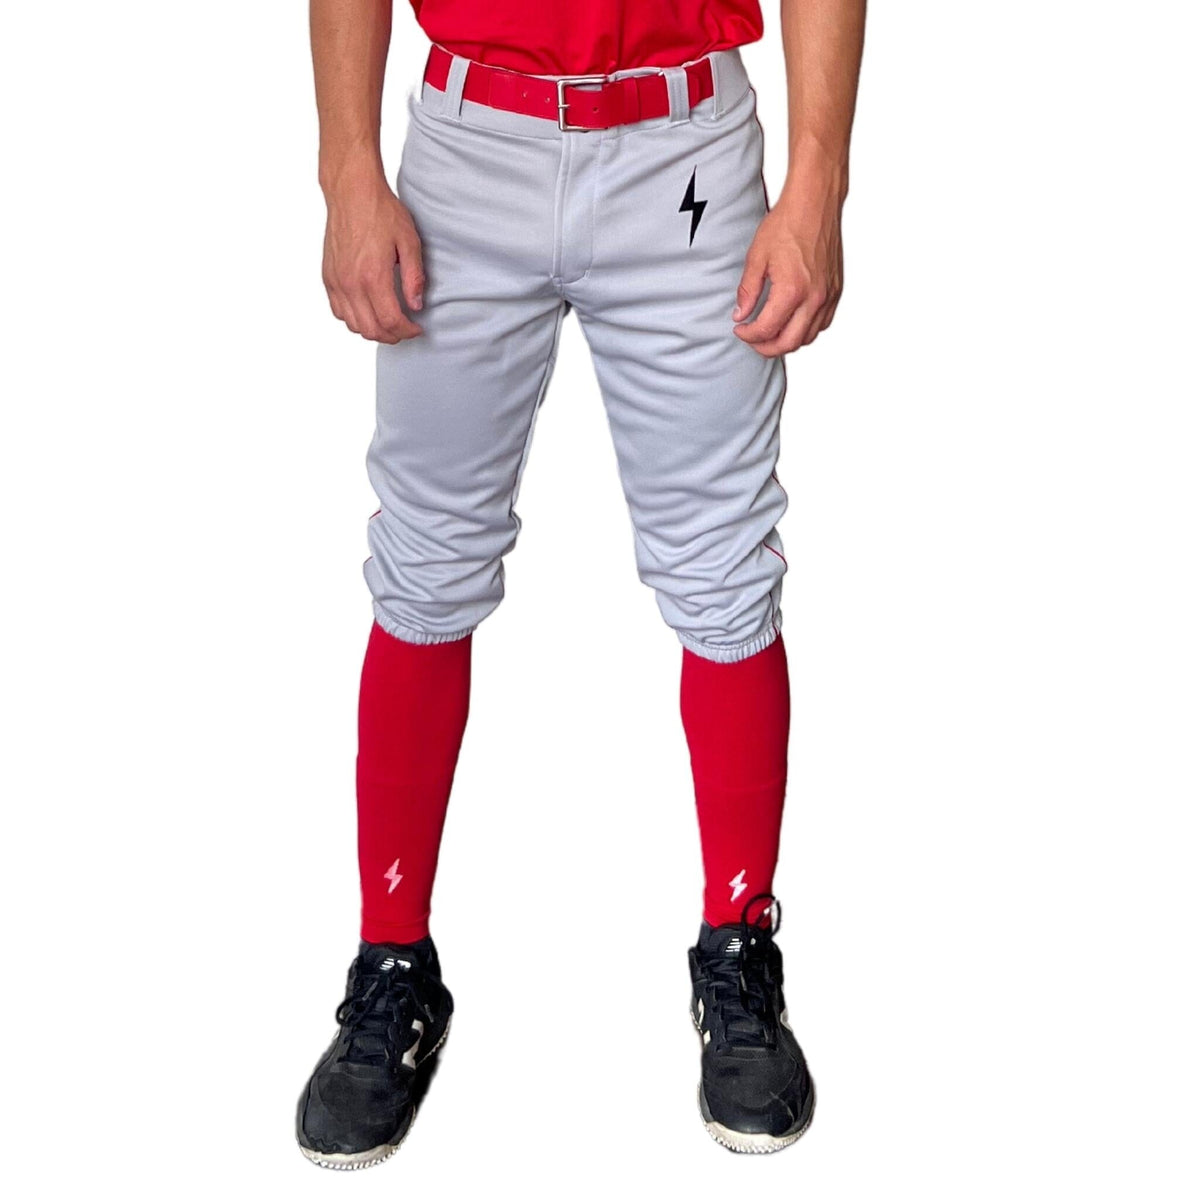 Under Armour Men's Ace Knicker Baseball Softball pant w/black/red